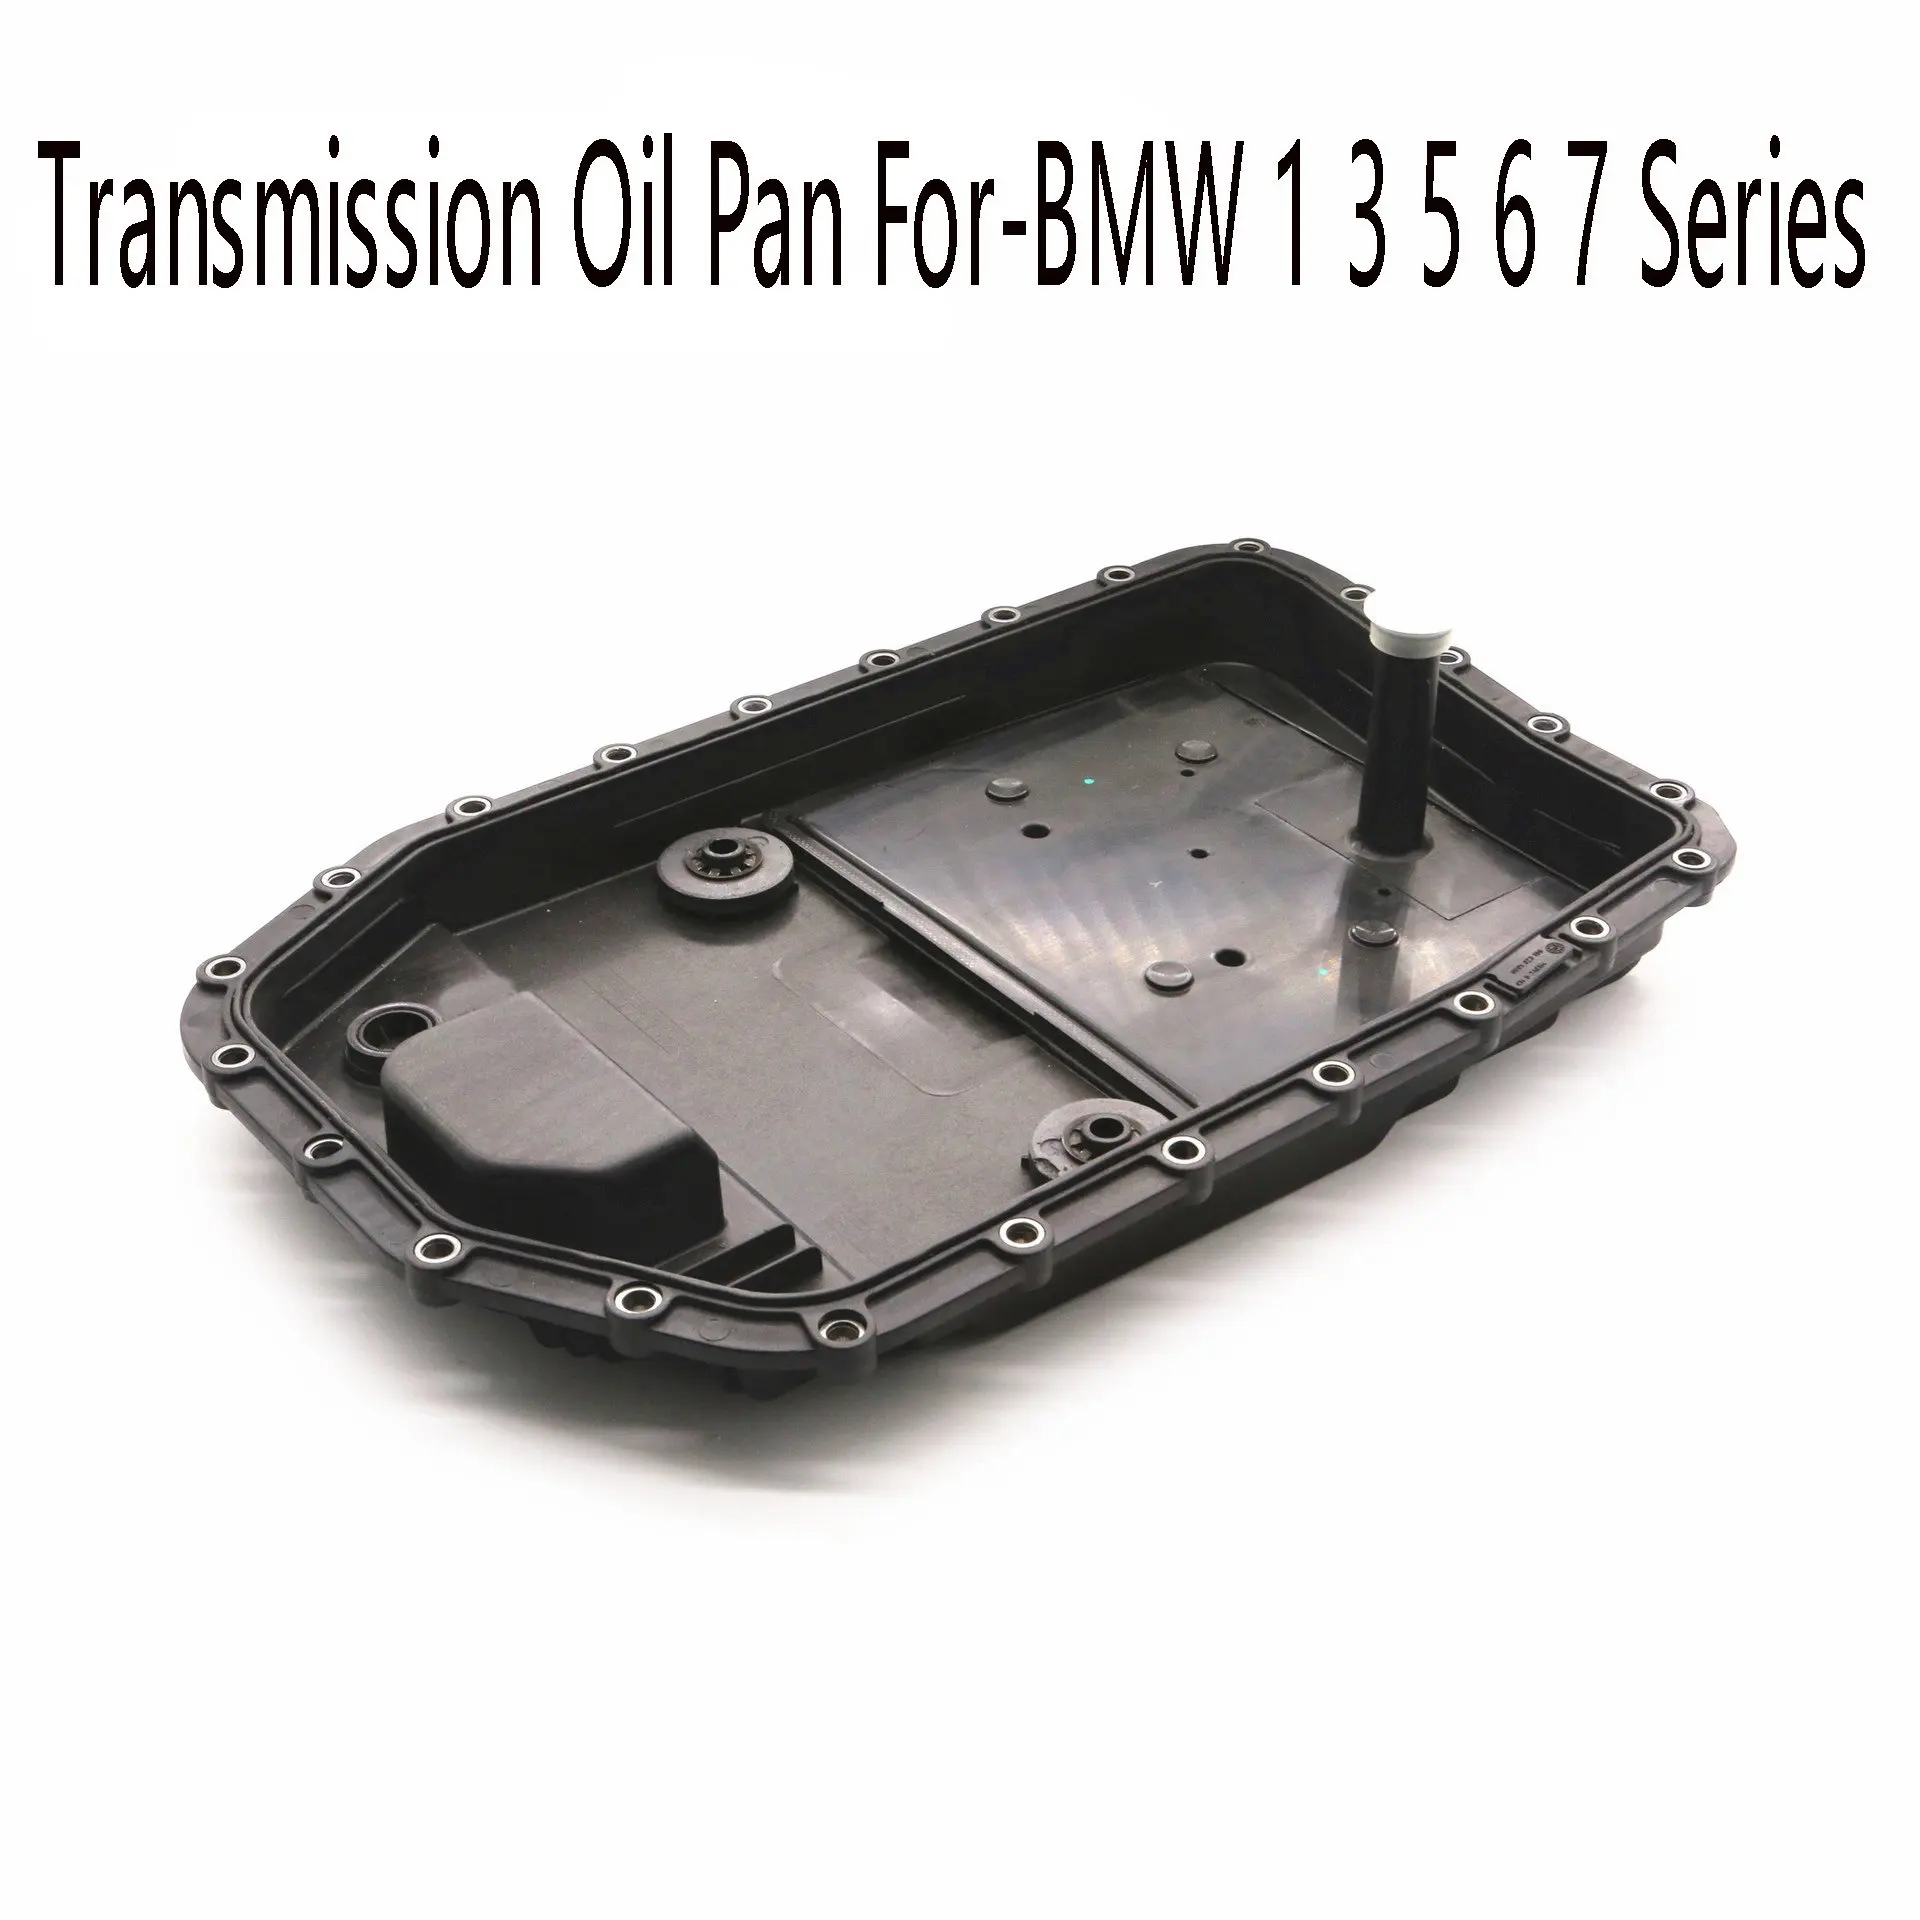 

Transmission Oil Pan For-BMW 1 3 5 6 7 Series Z4 E85 E86 E70 X3 E60 E71 E82 E88 E89 6HP19 24117571217